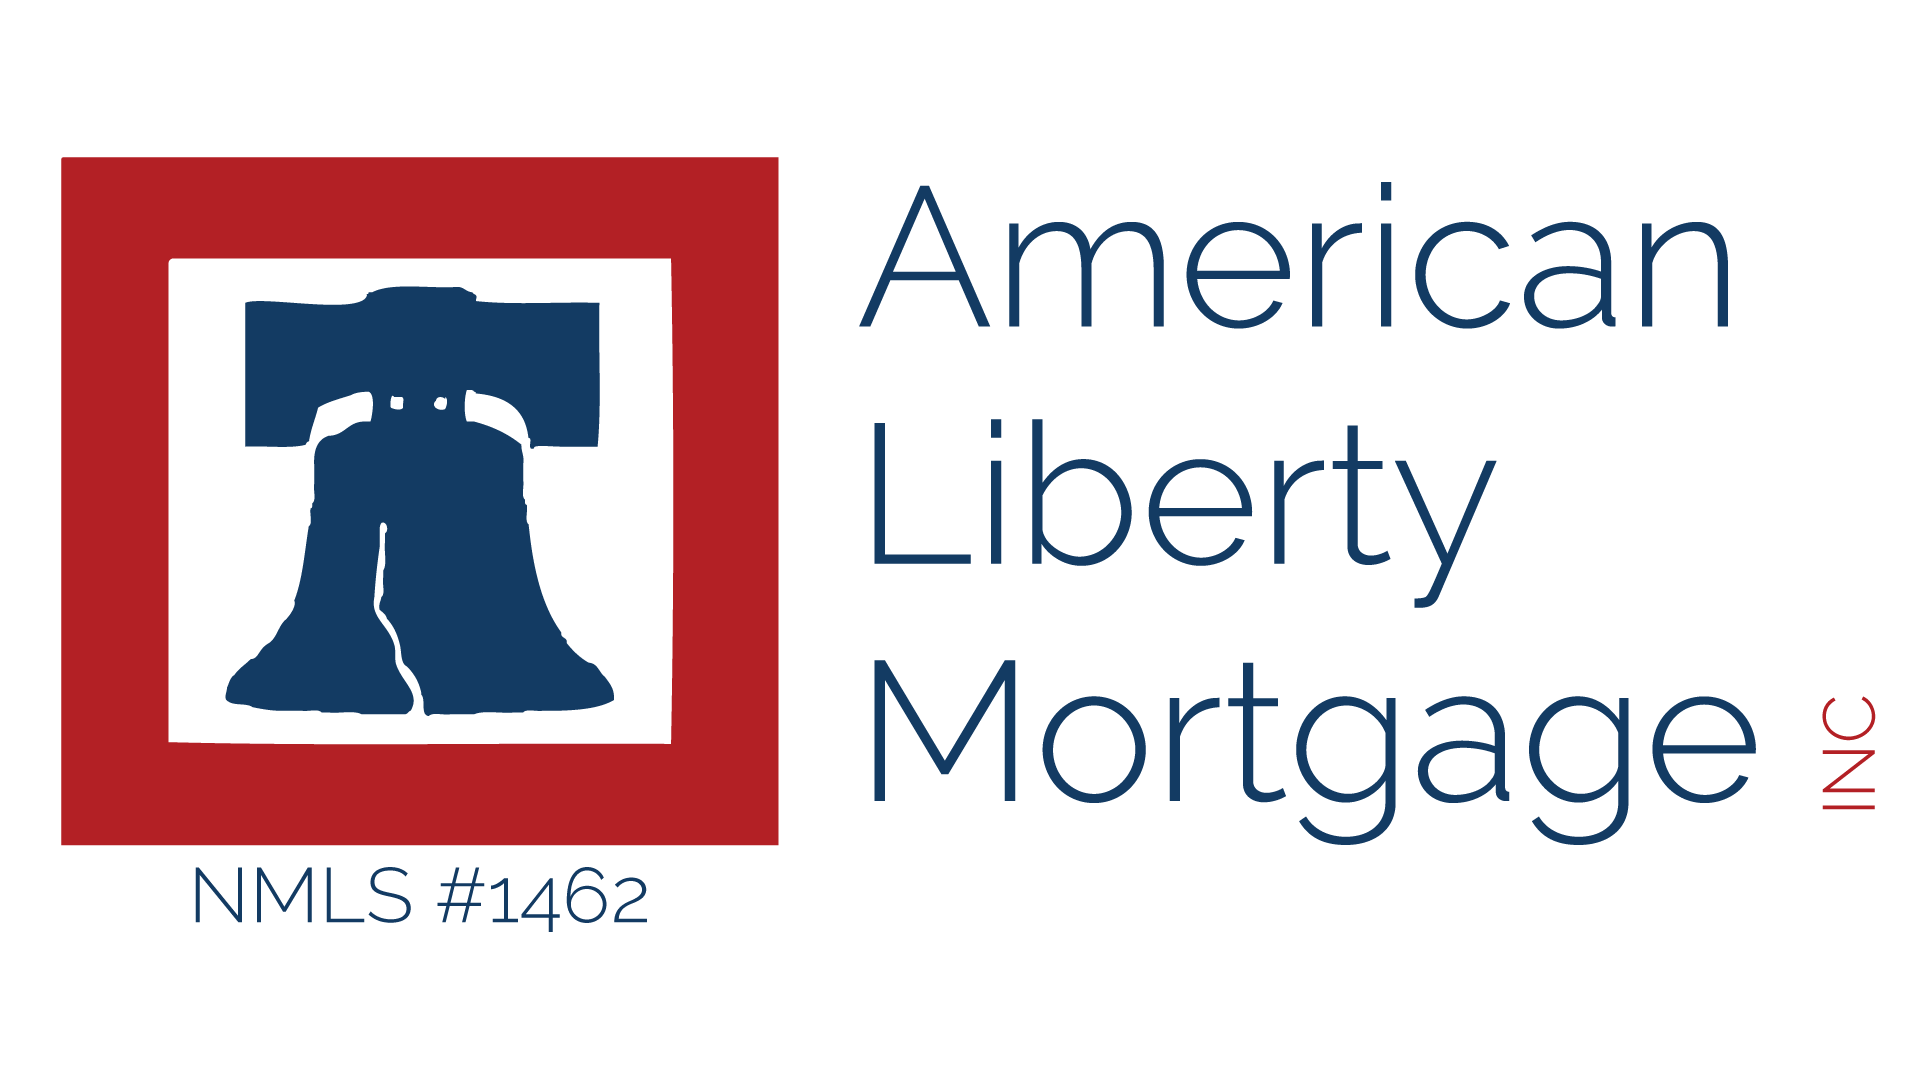 American Liberty Mortgage, Inc.